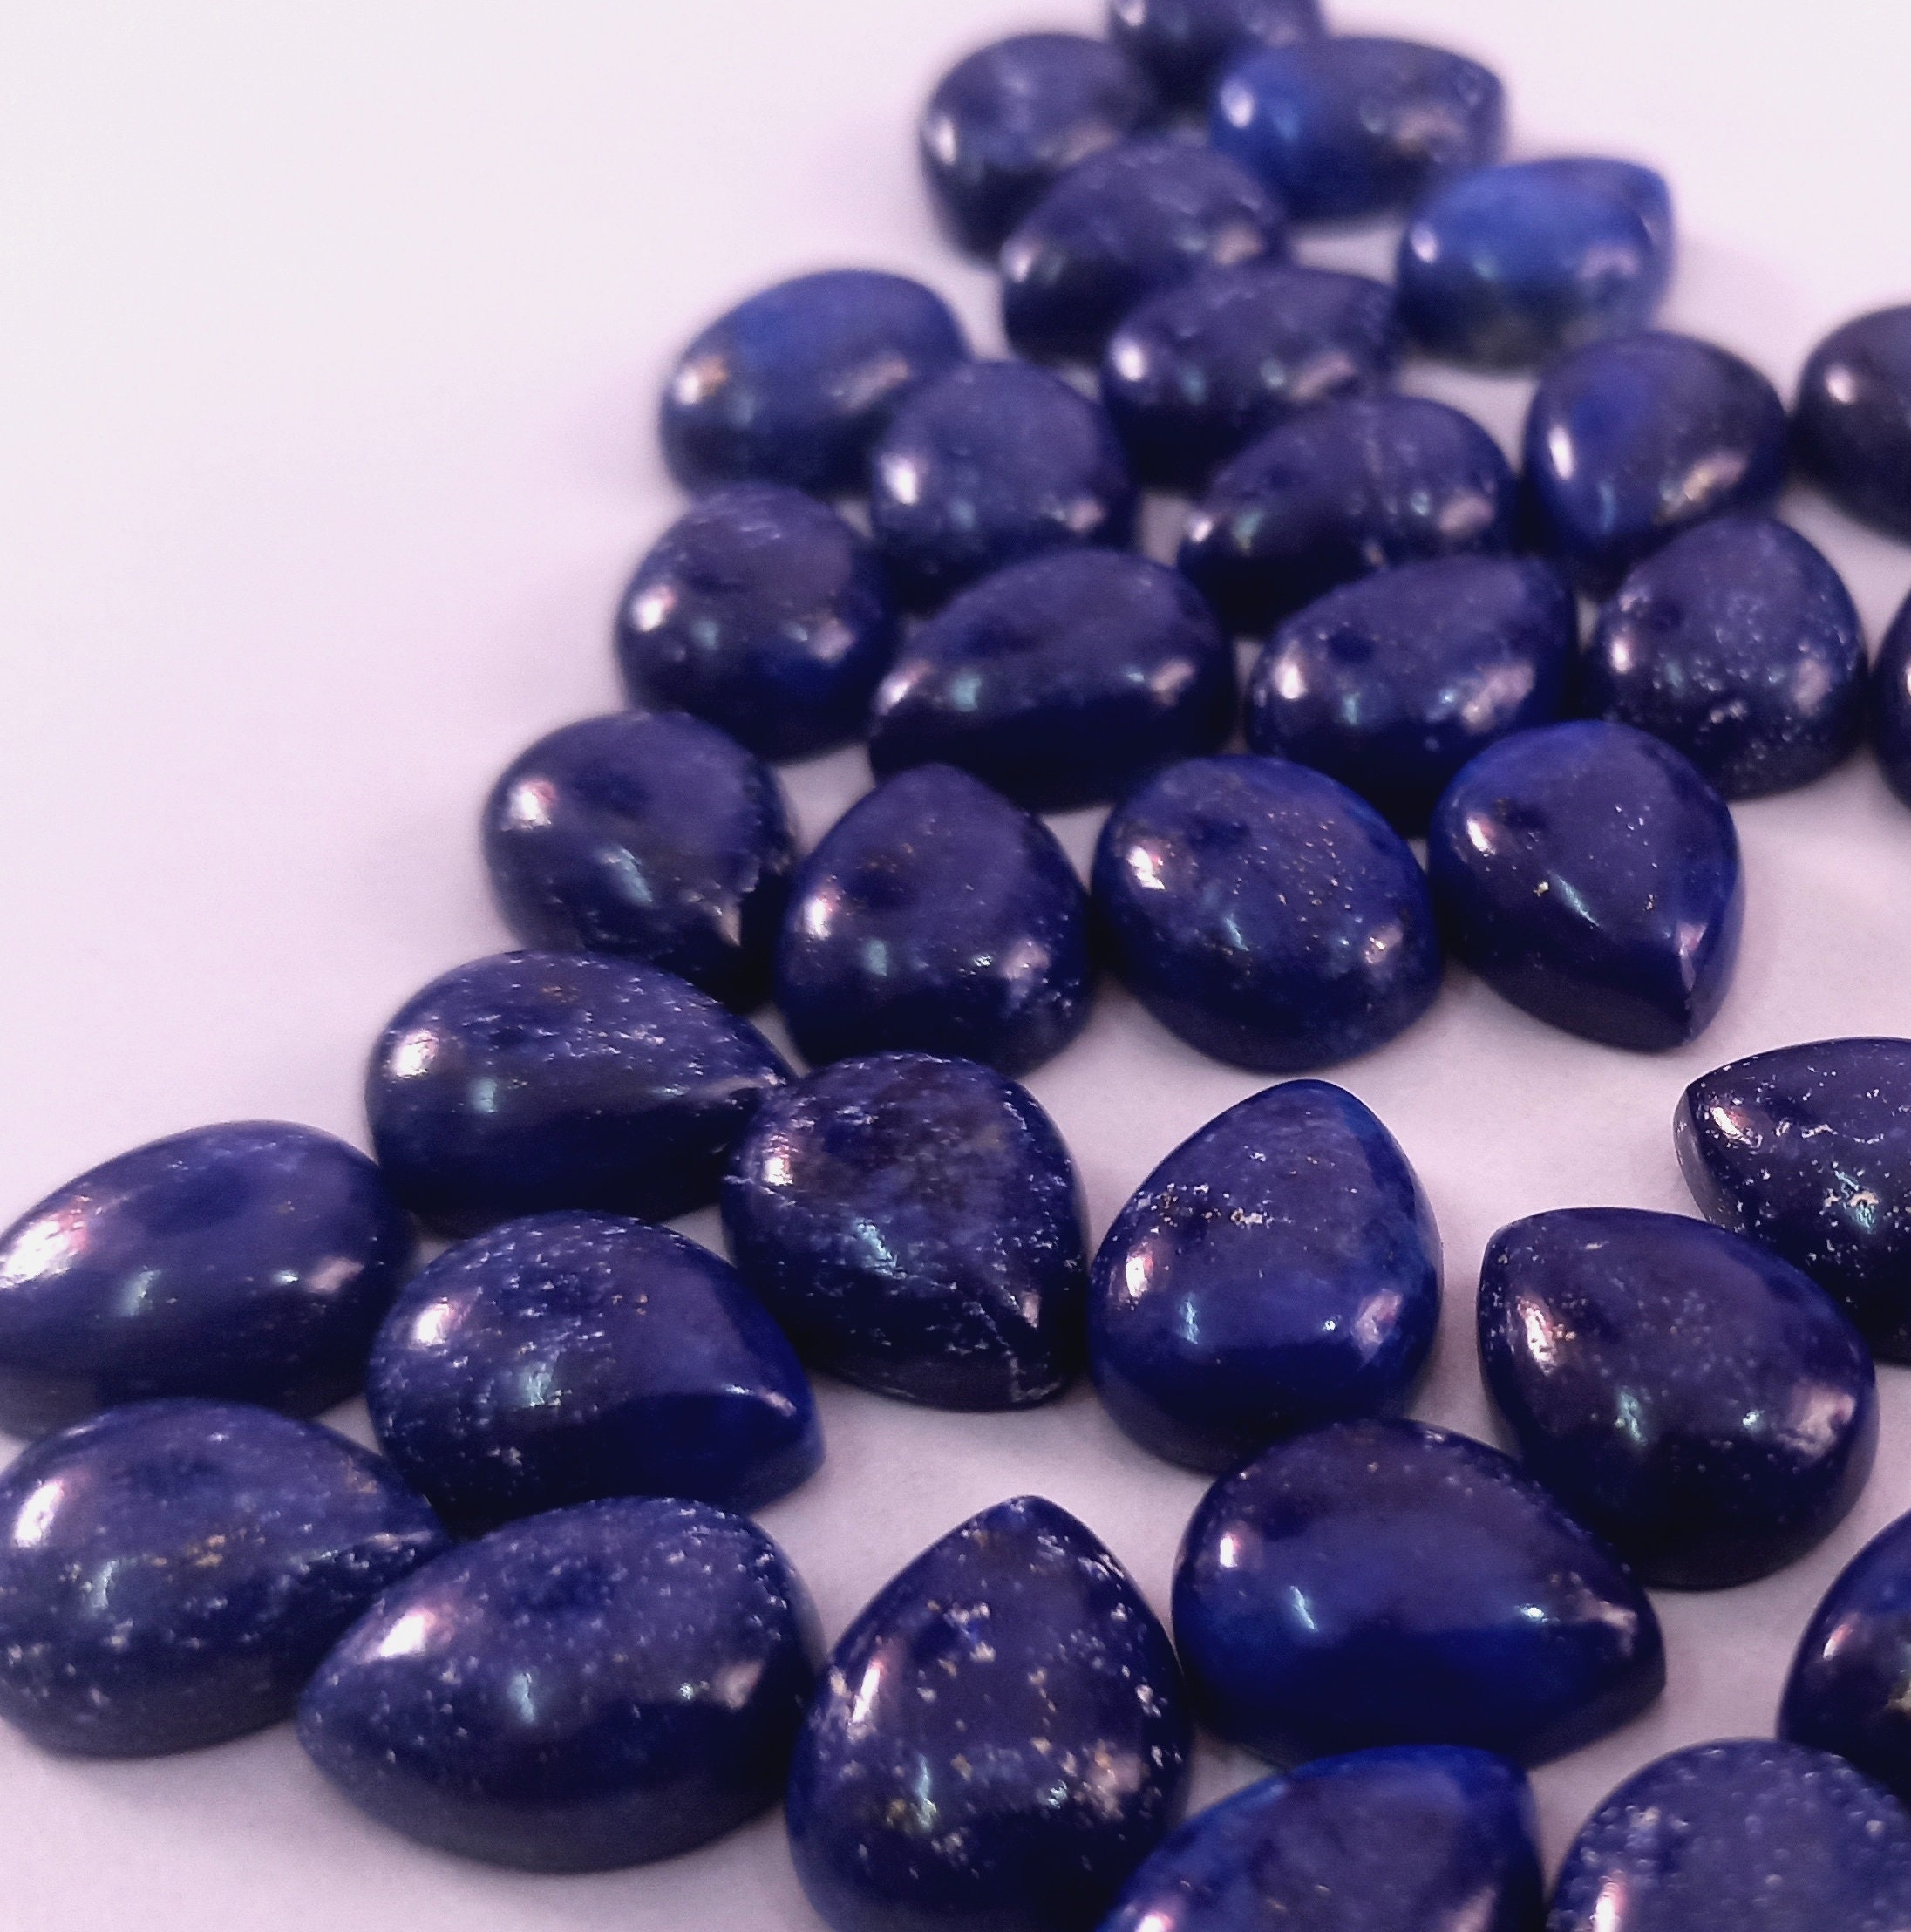 Mix Size & Shape Lapis Lazuli Loose Gemstone For Jewelry Making Wholesale Price Lot AAA+Top Quality Natural Gemstone Lapis Lazuli Cabochon